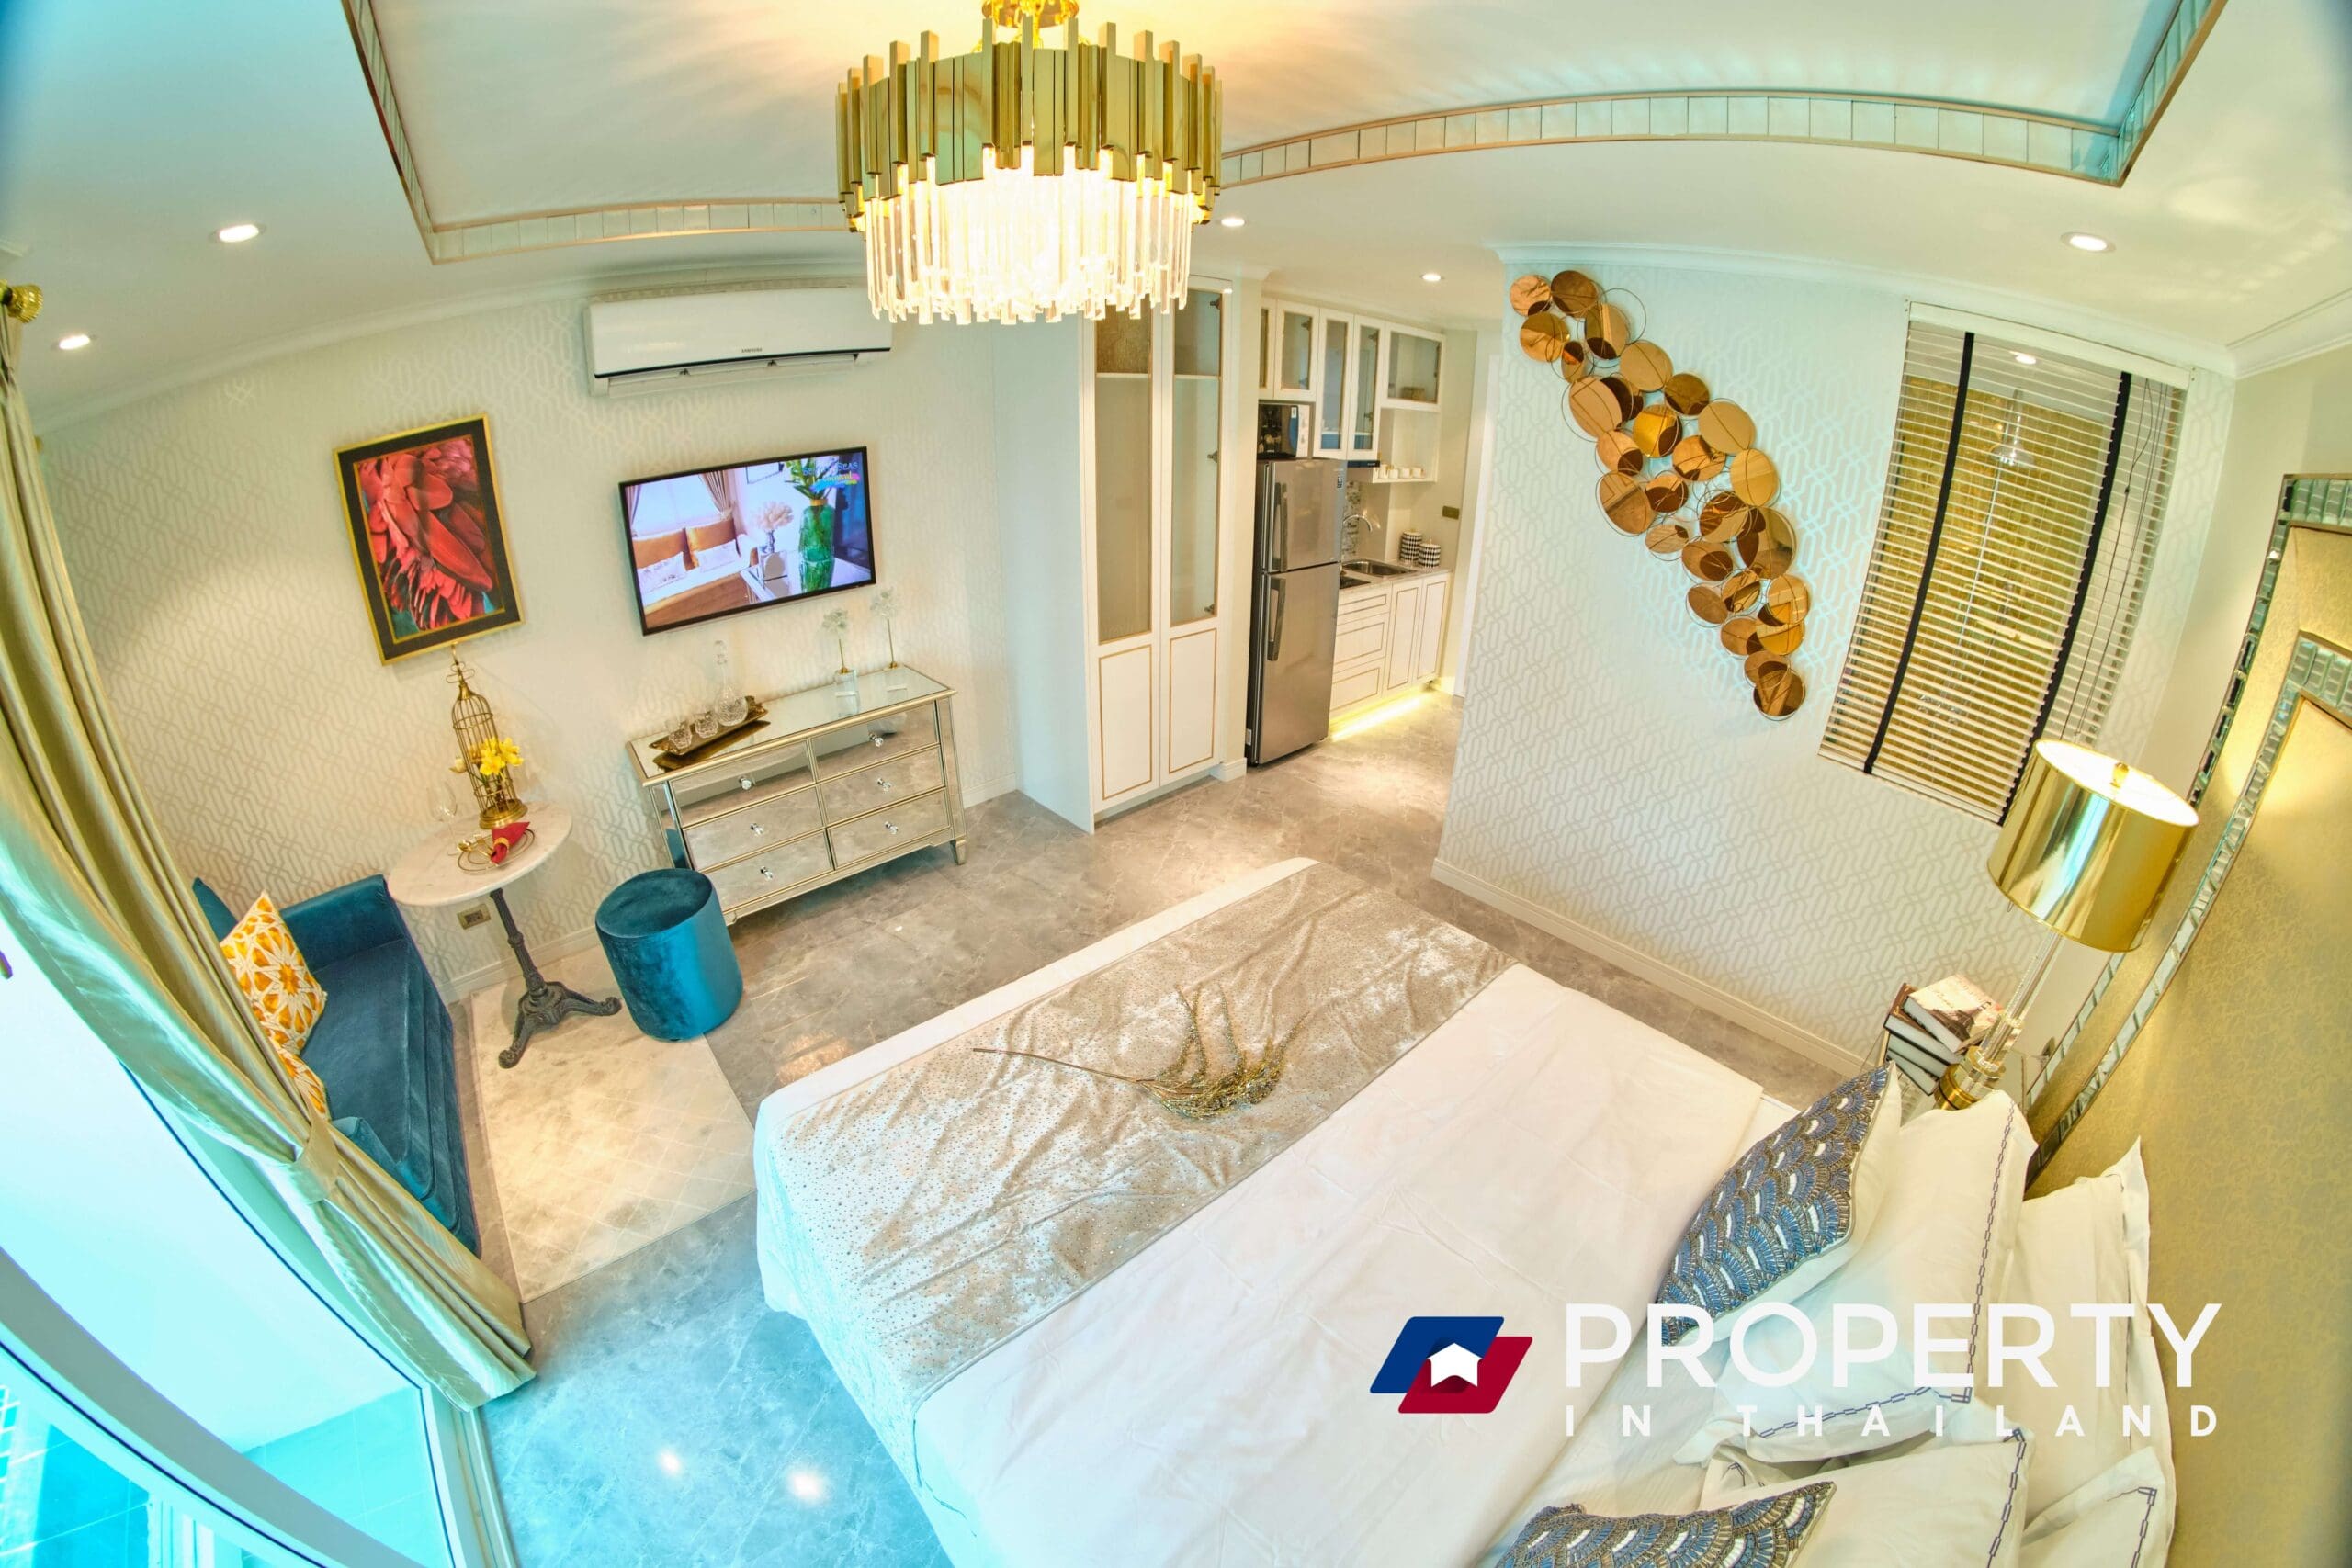 Thailand Real Estate (Bedroom- 26sqm)